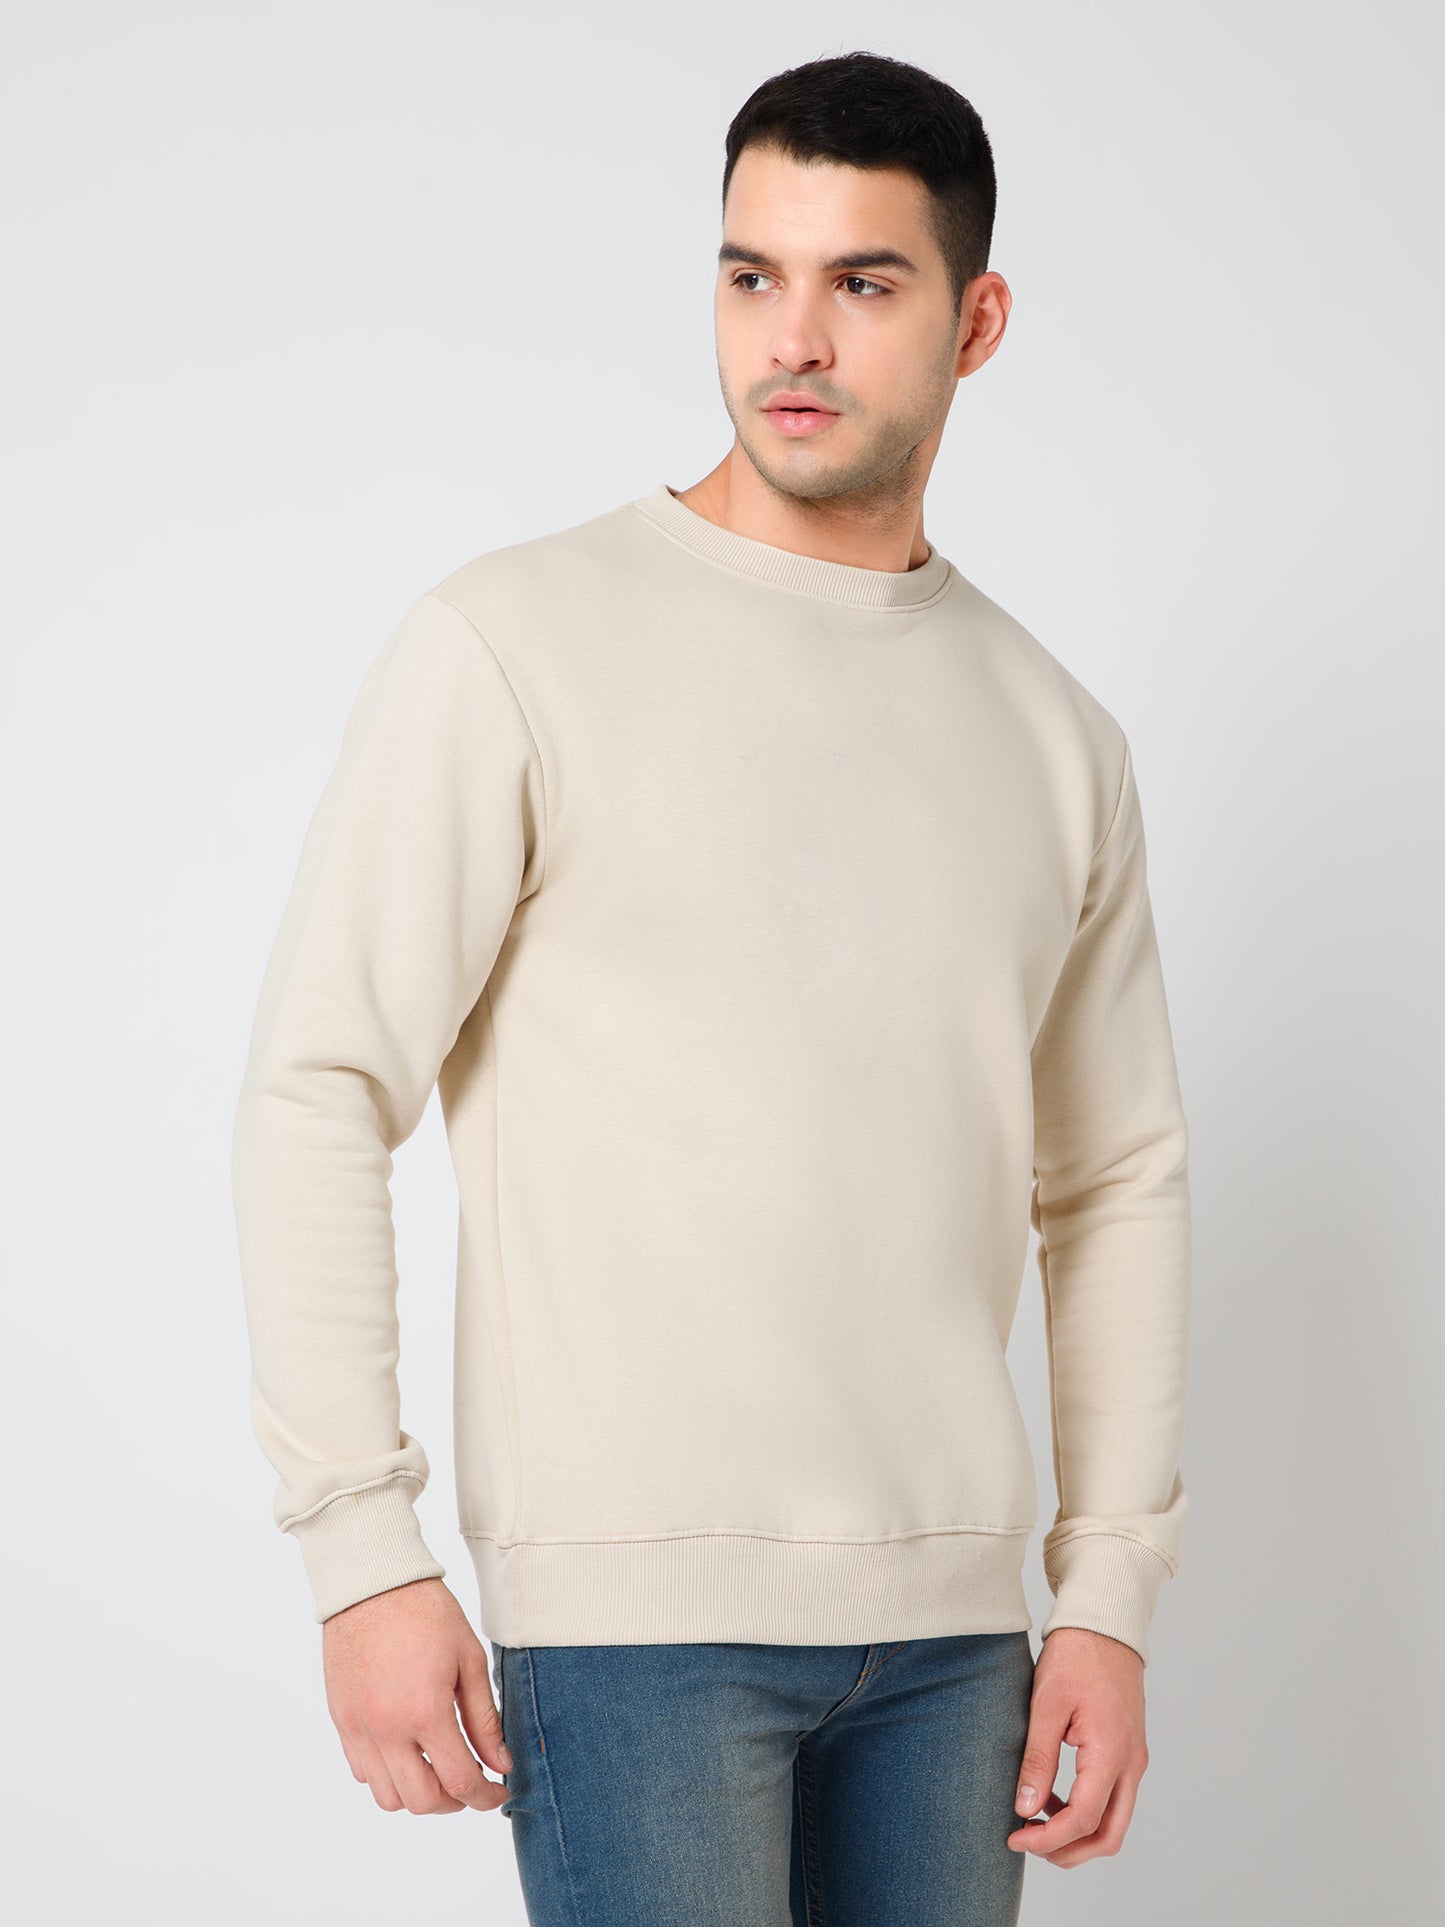 Solid Ivory Sweatshirt